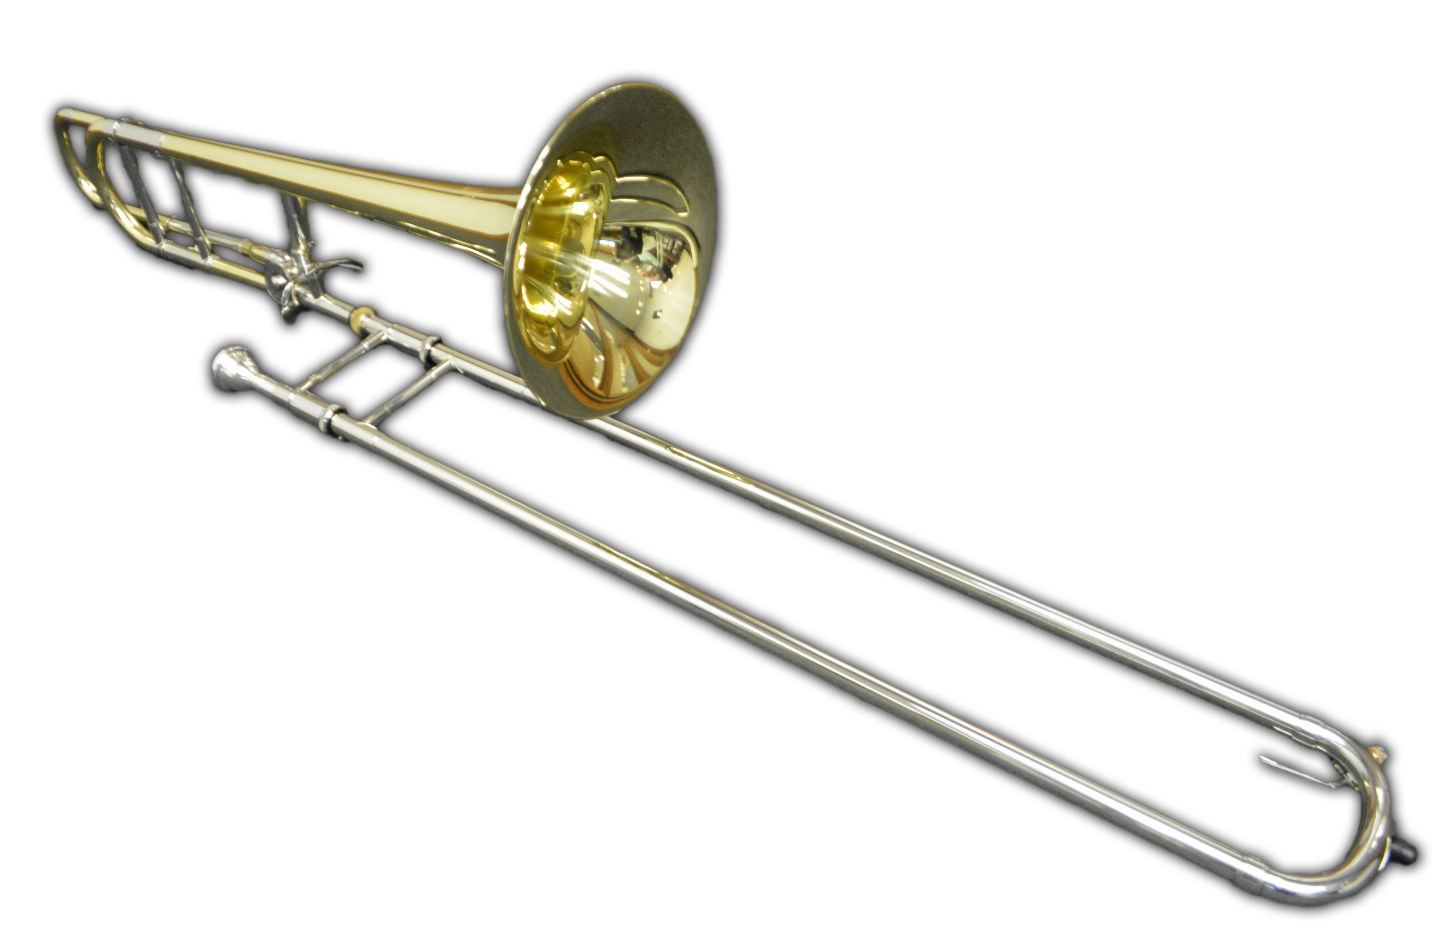 American Heritage Open Wrap Trombone